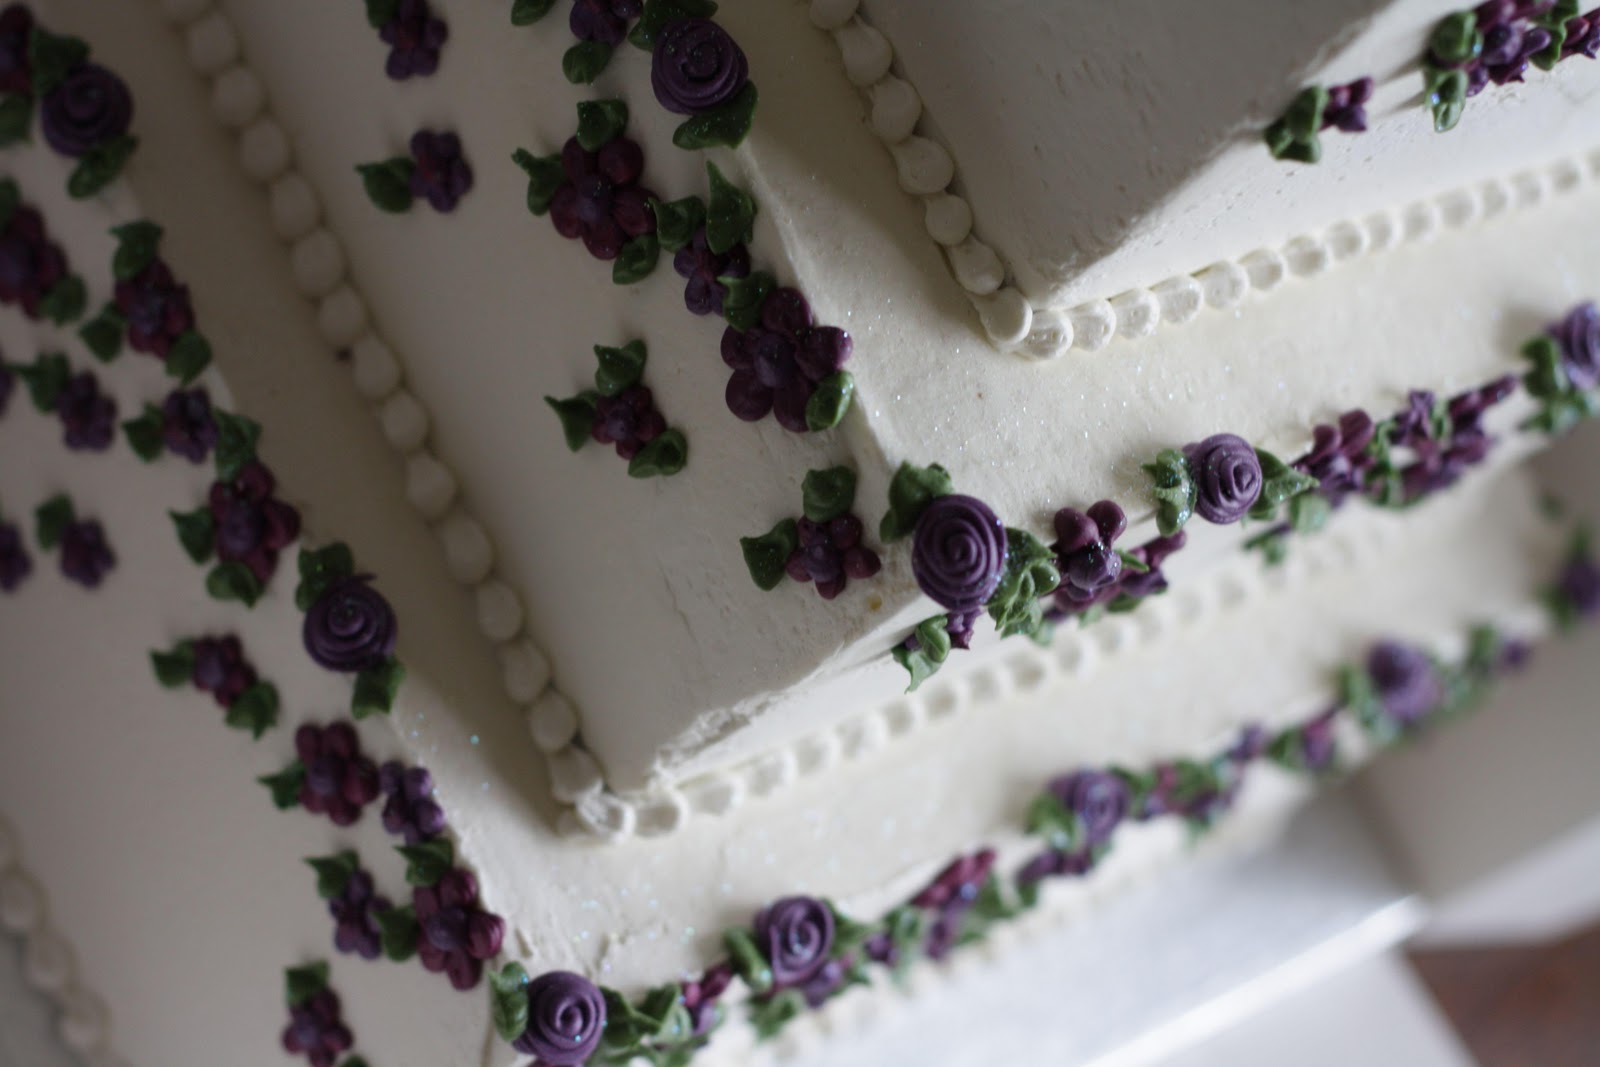 Wedding Cake with purple